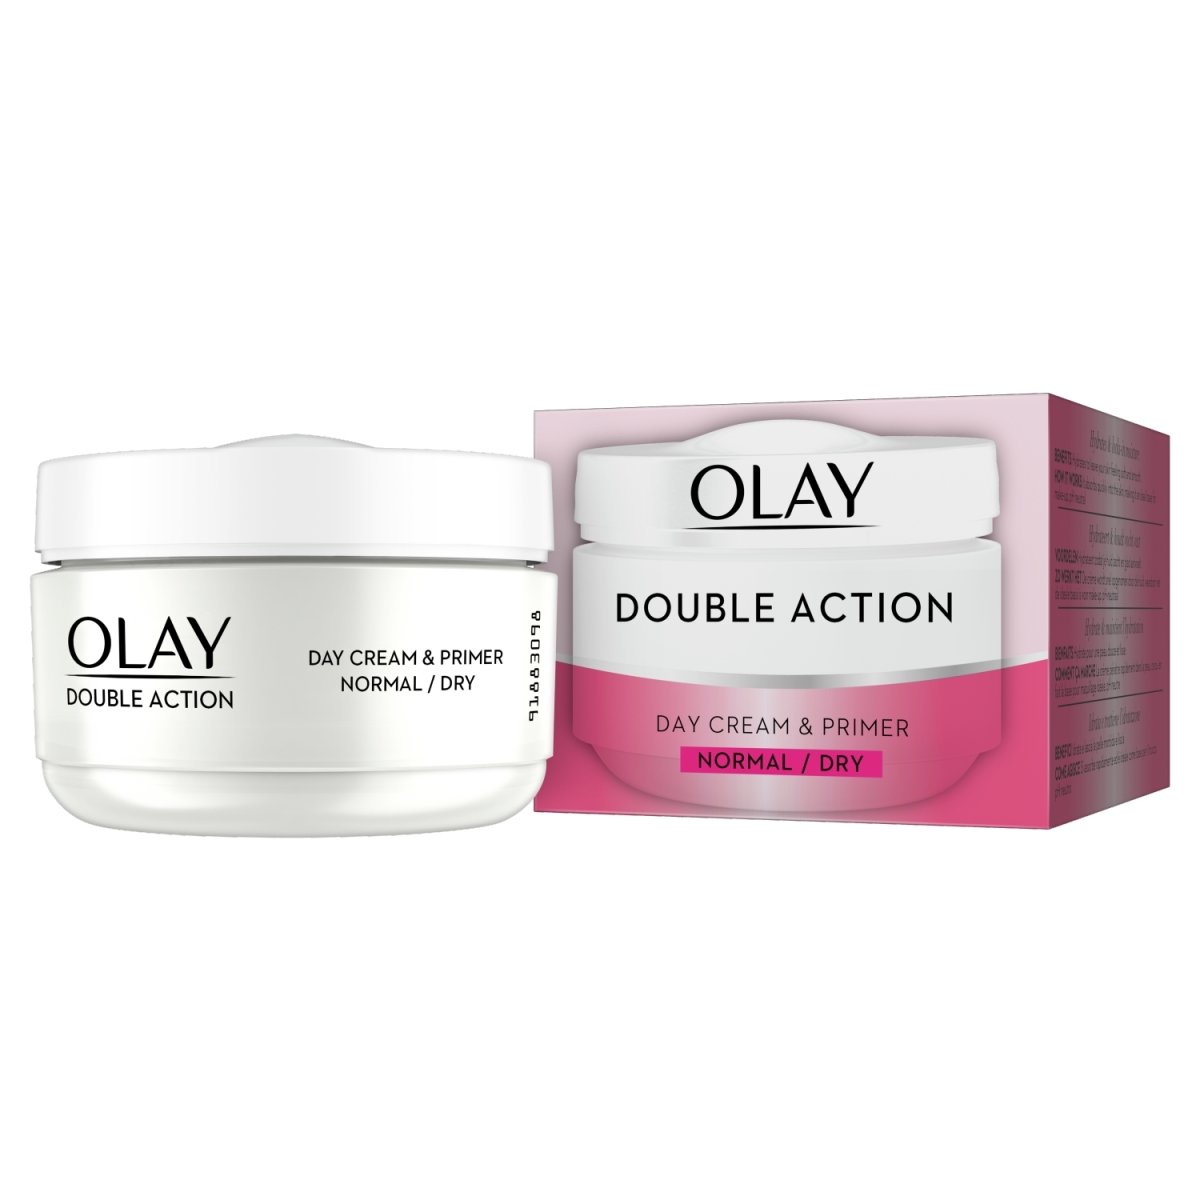 Olay Double Action Day Cream Regular - Intamarque 5000174070354